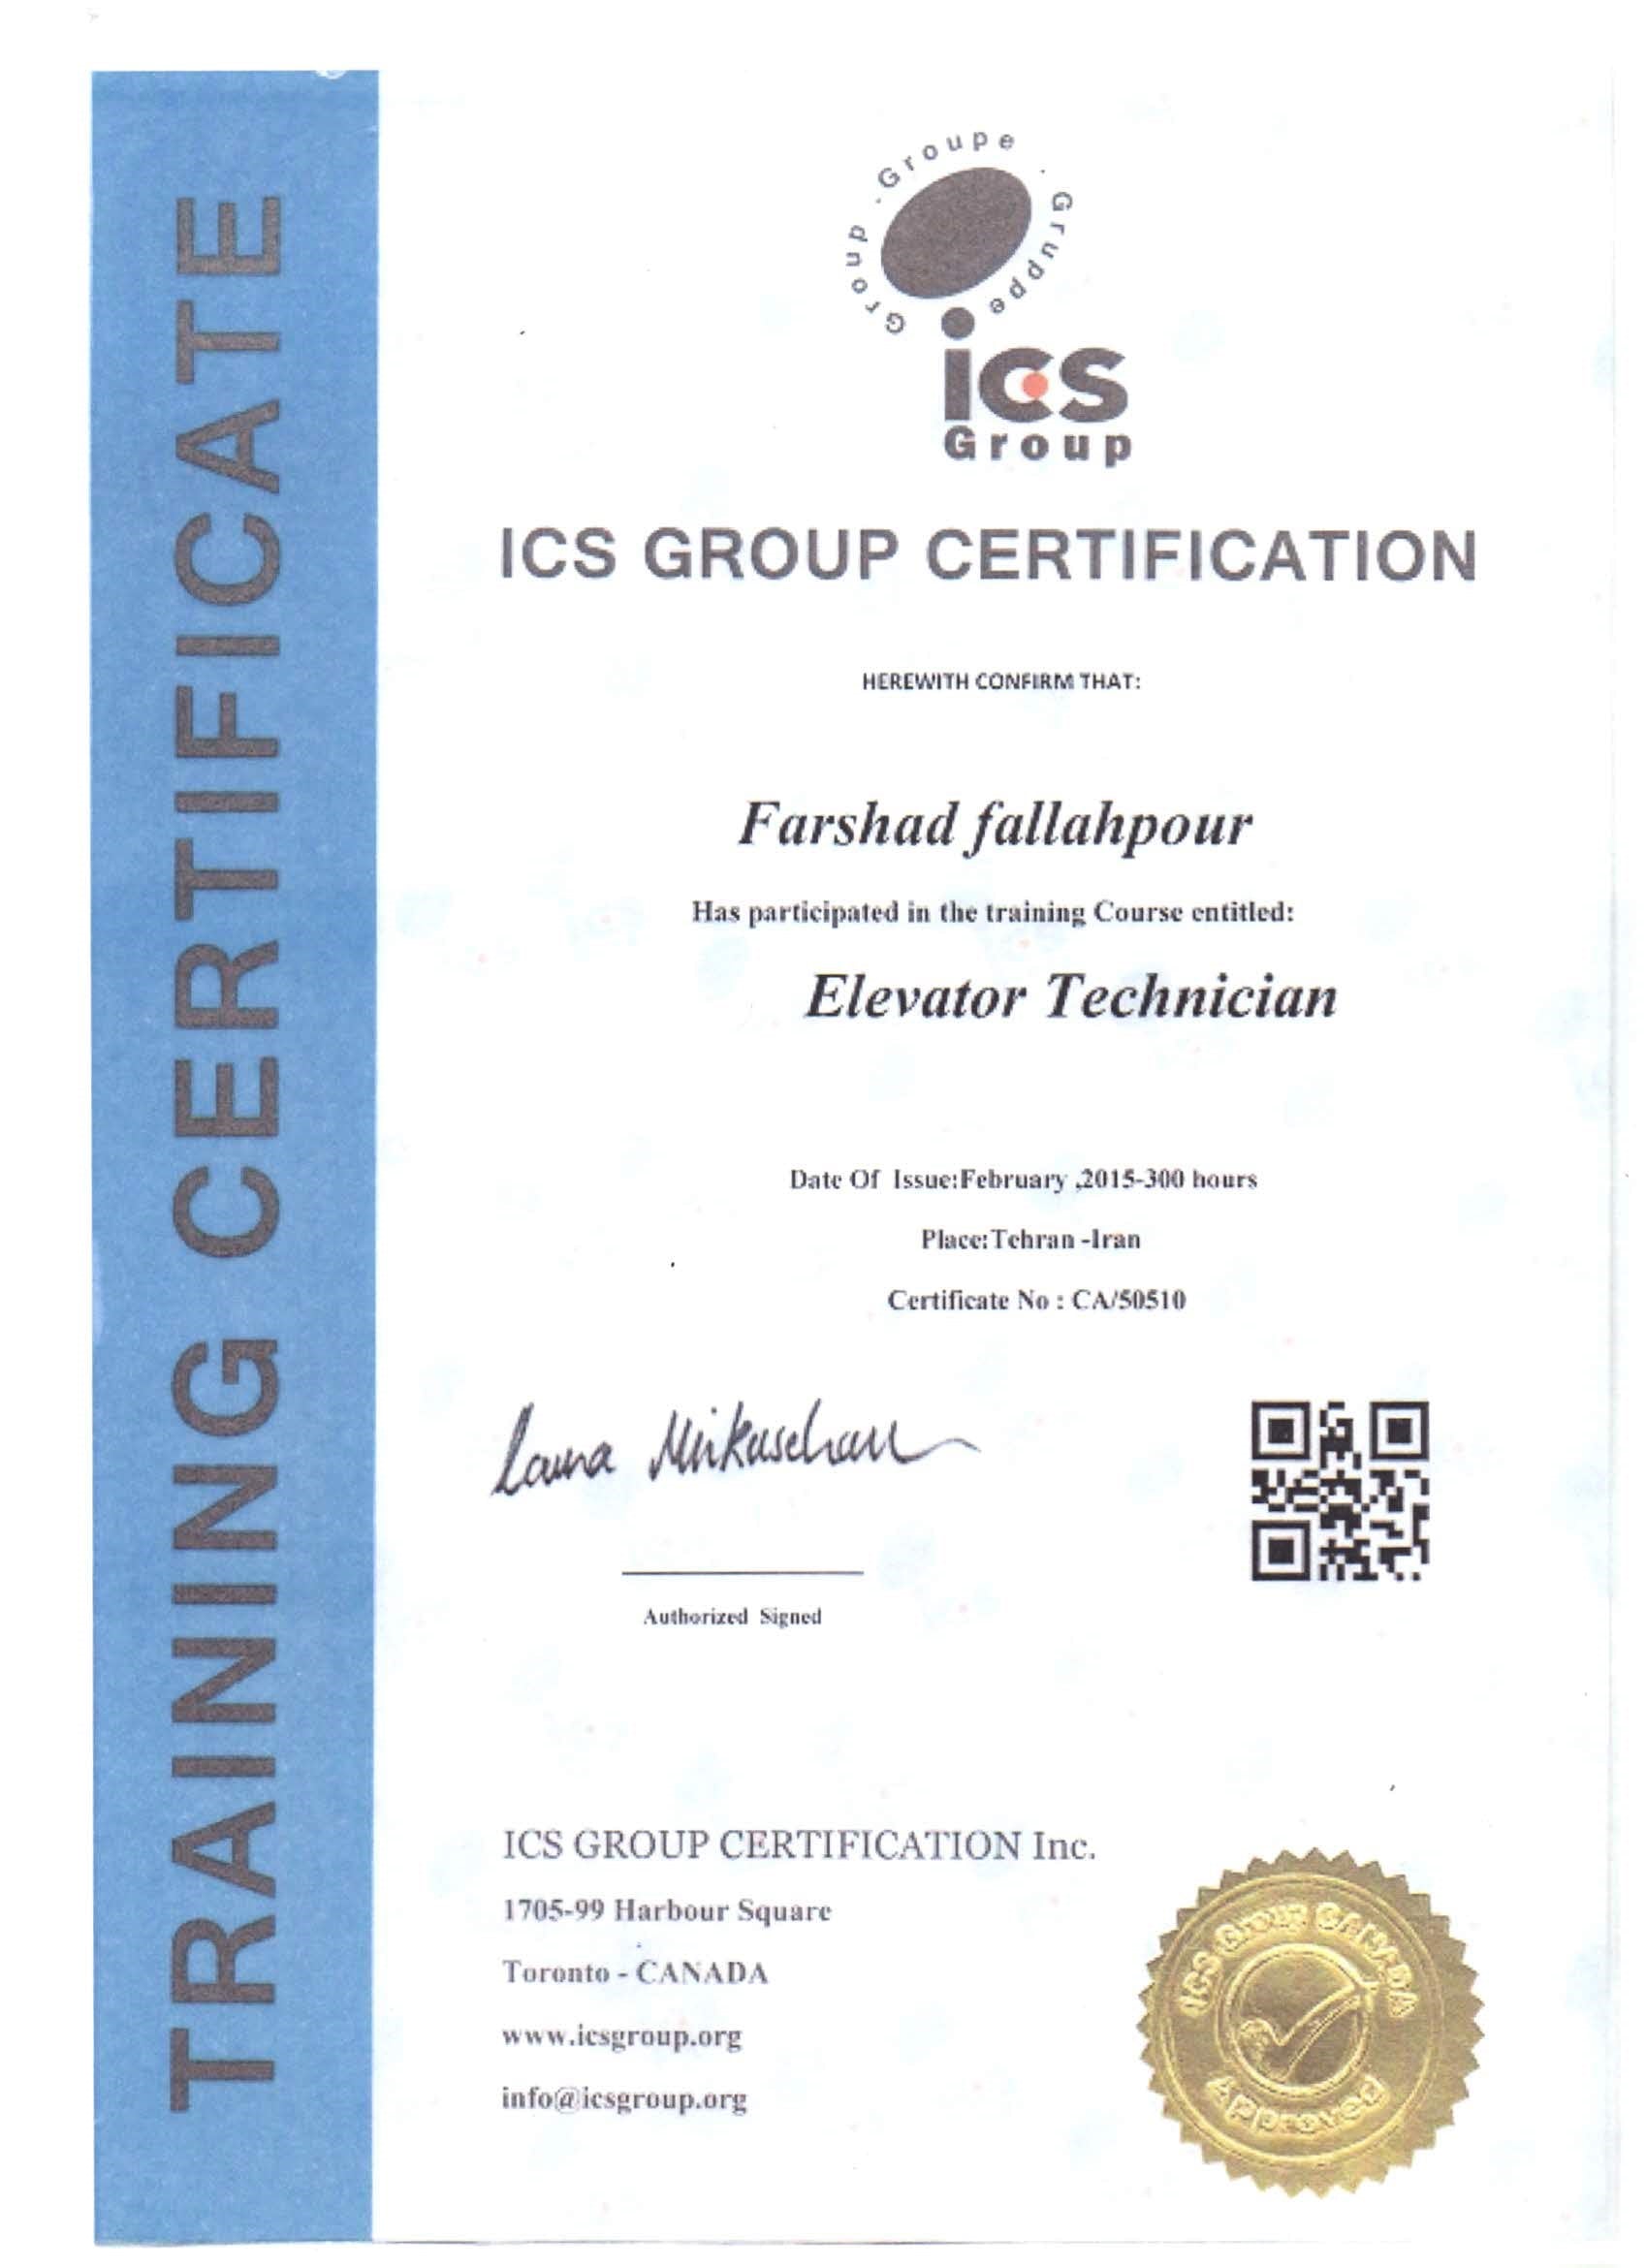 کسب گواهینامه آموزش TRIANING CERTIFICATE از ICS GROUP CERTIFICATION